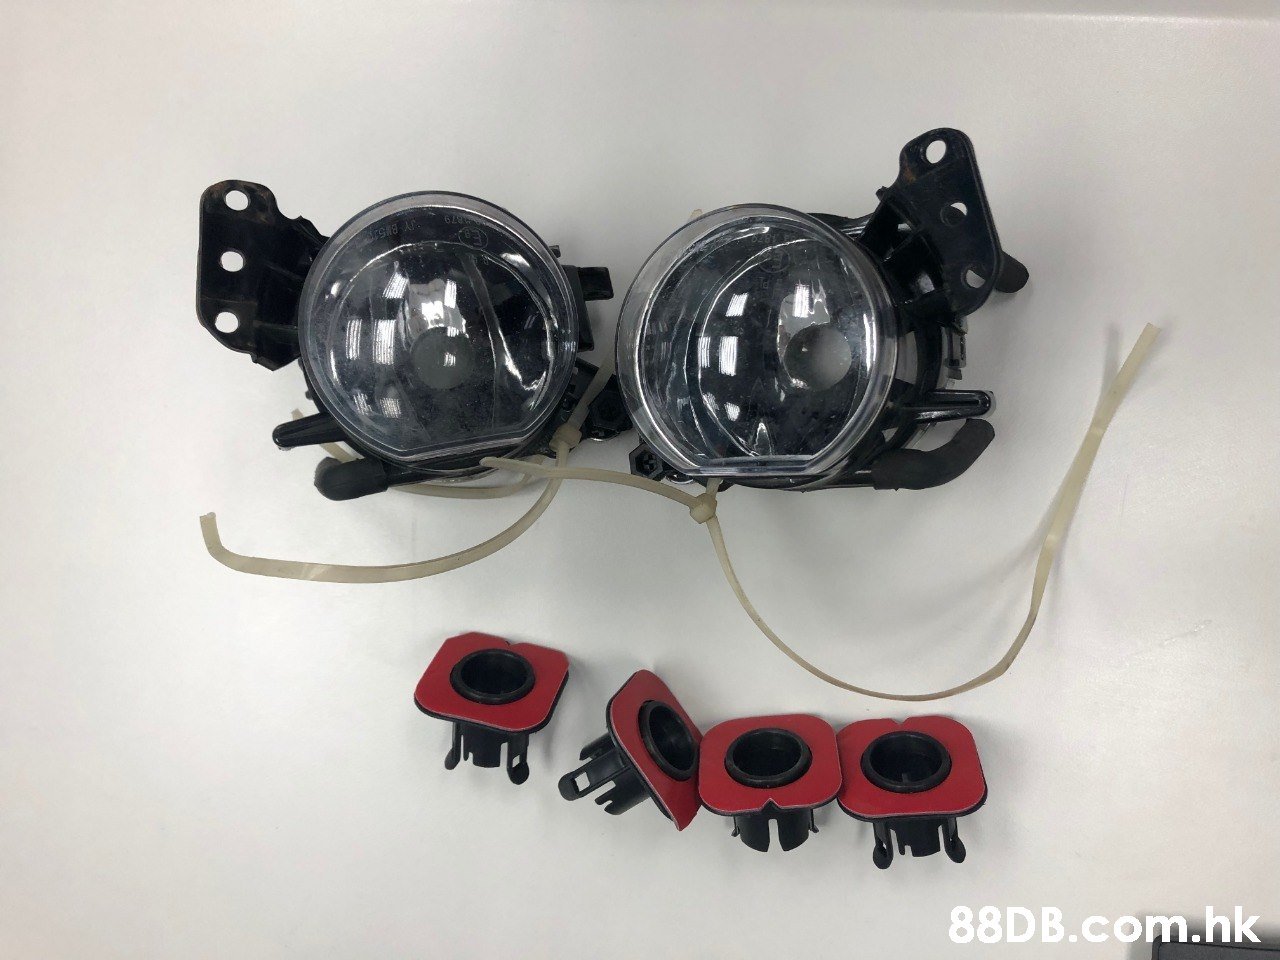 88D B.com.hk  Automotive lighting,Auto part,Headlamp,Automotive fog light,Motorcycle accessories